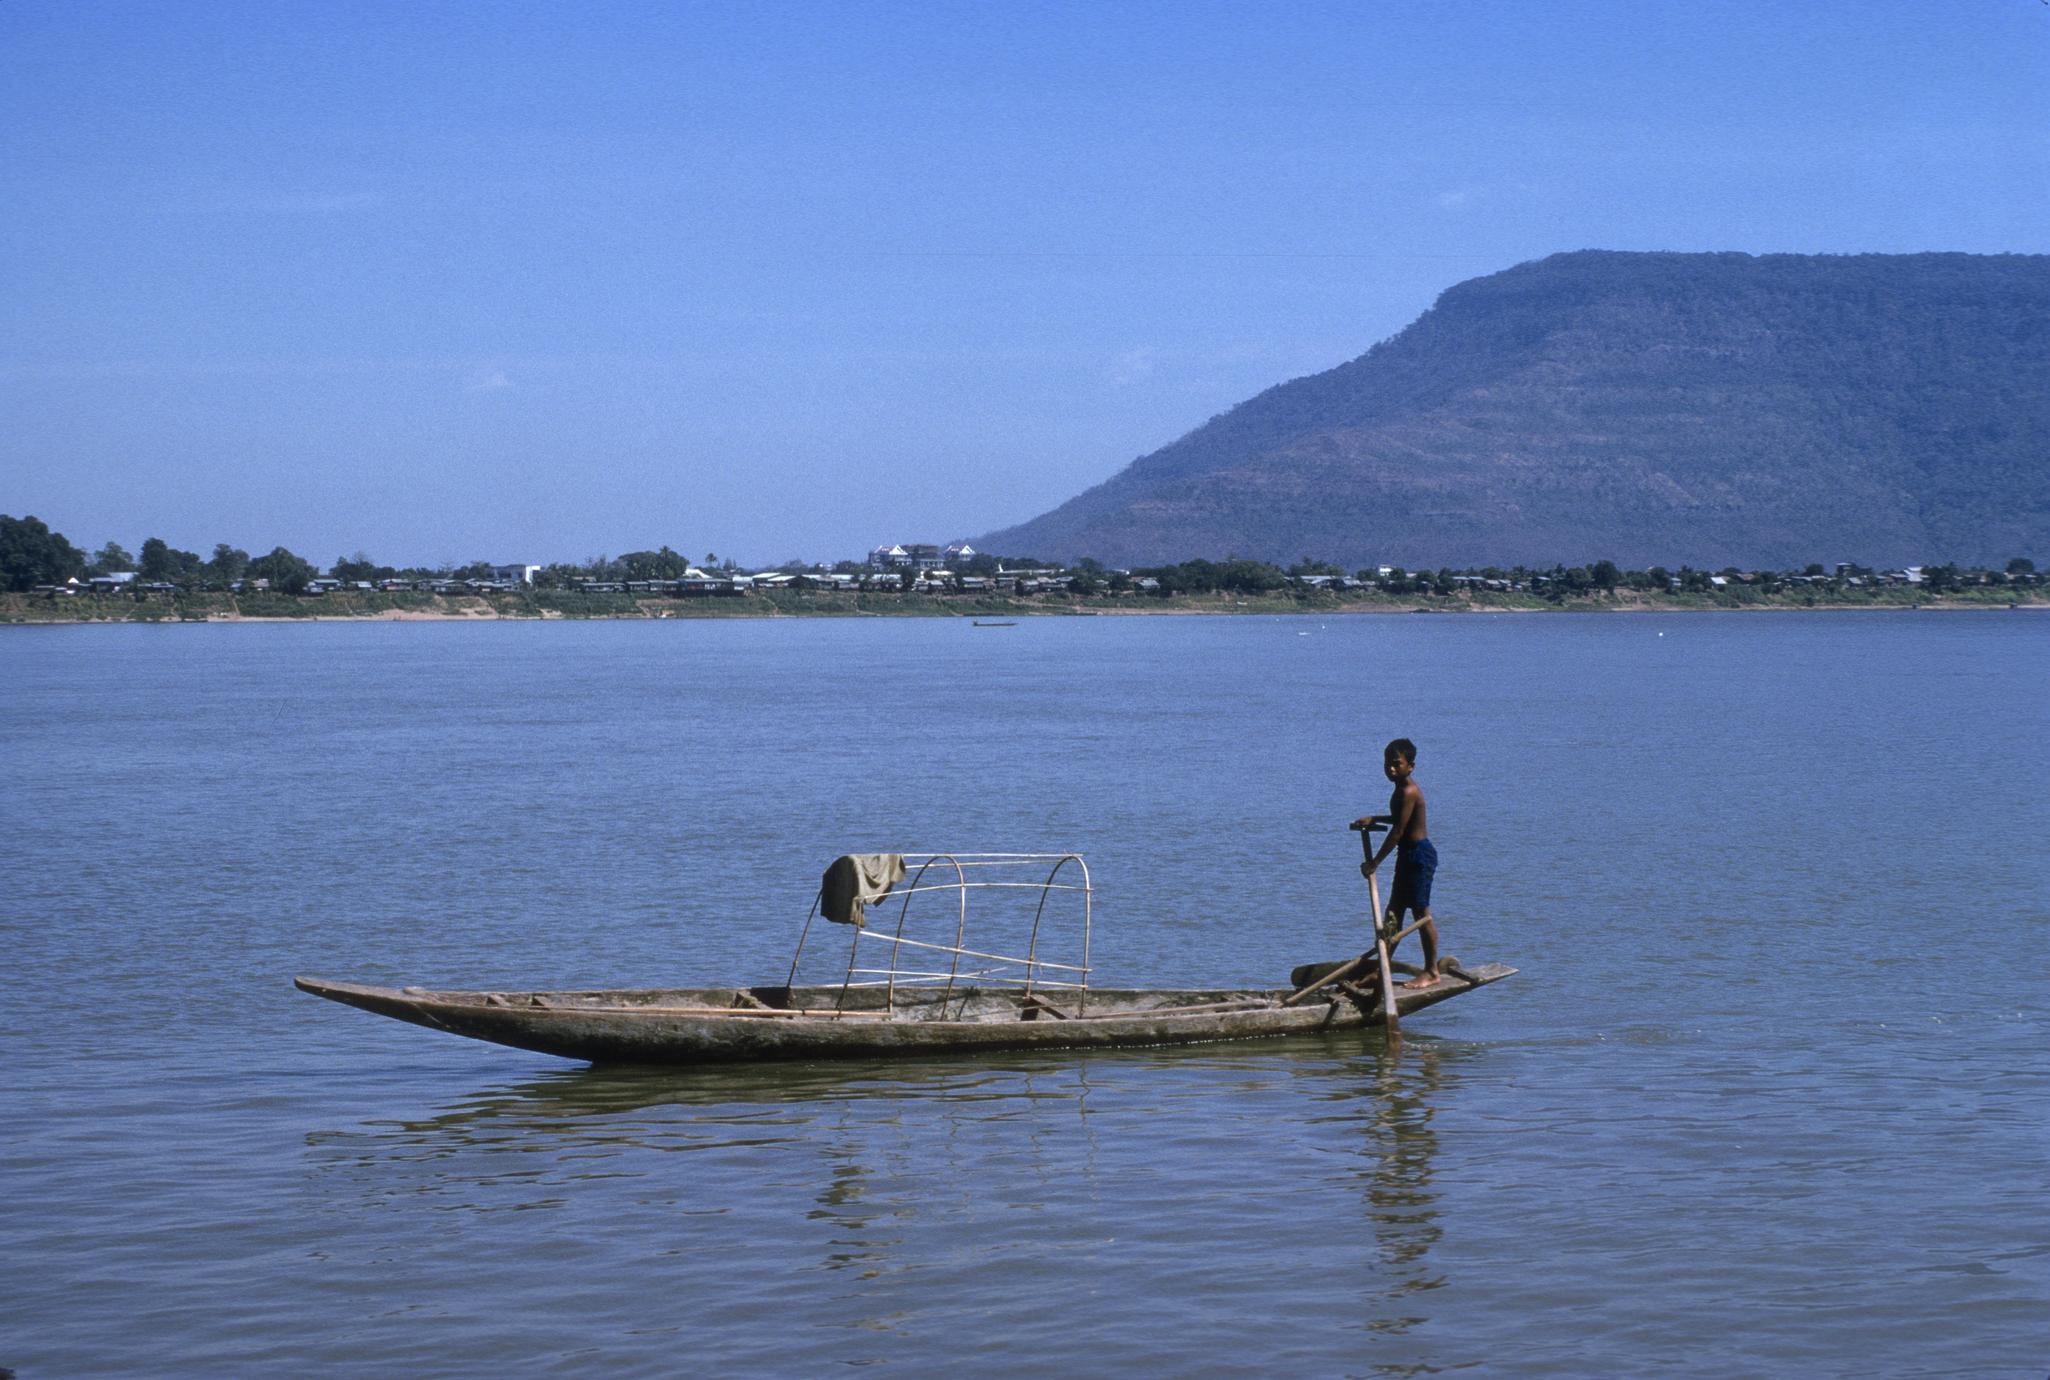 Boat on Mekong River